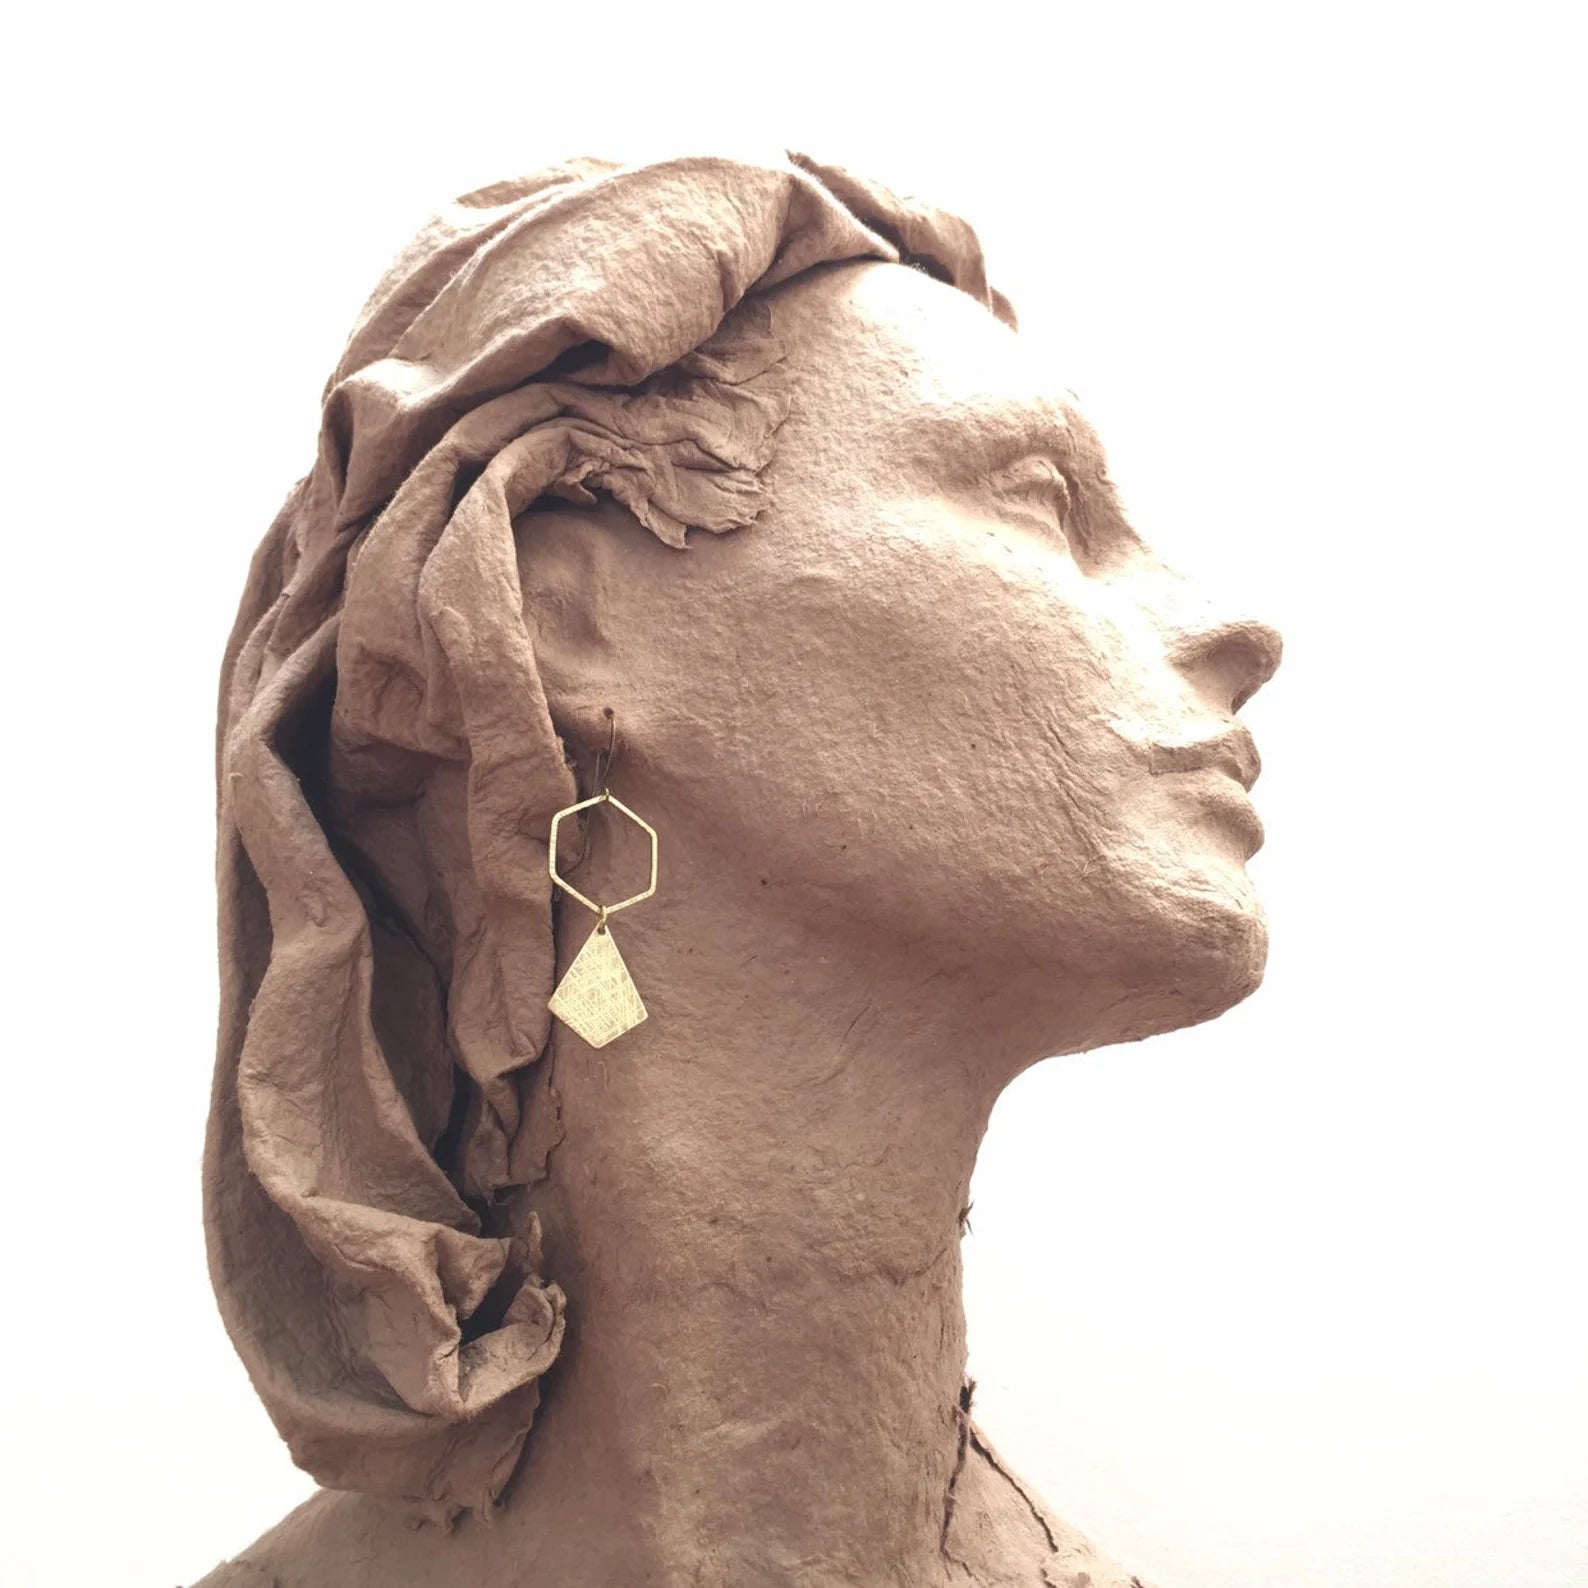  Brass Geometric Earrings Draya Koschmann